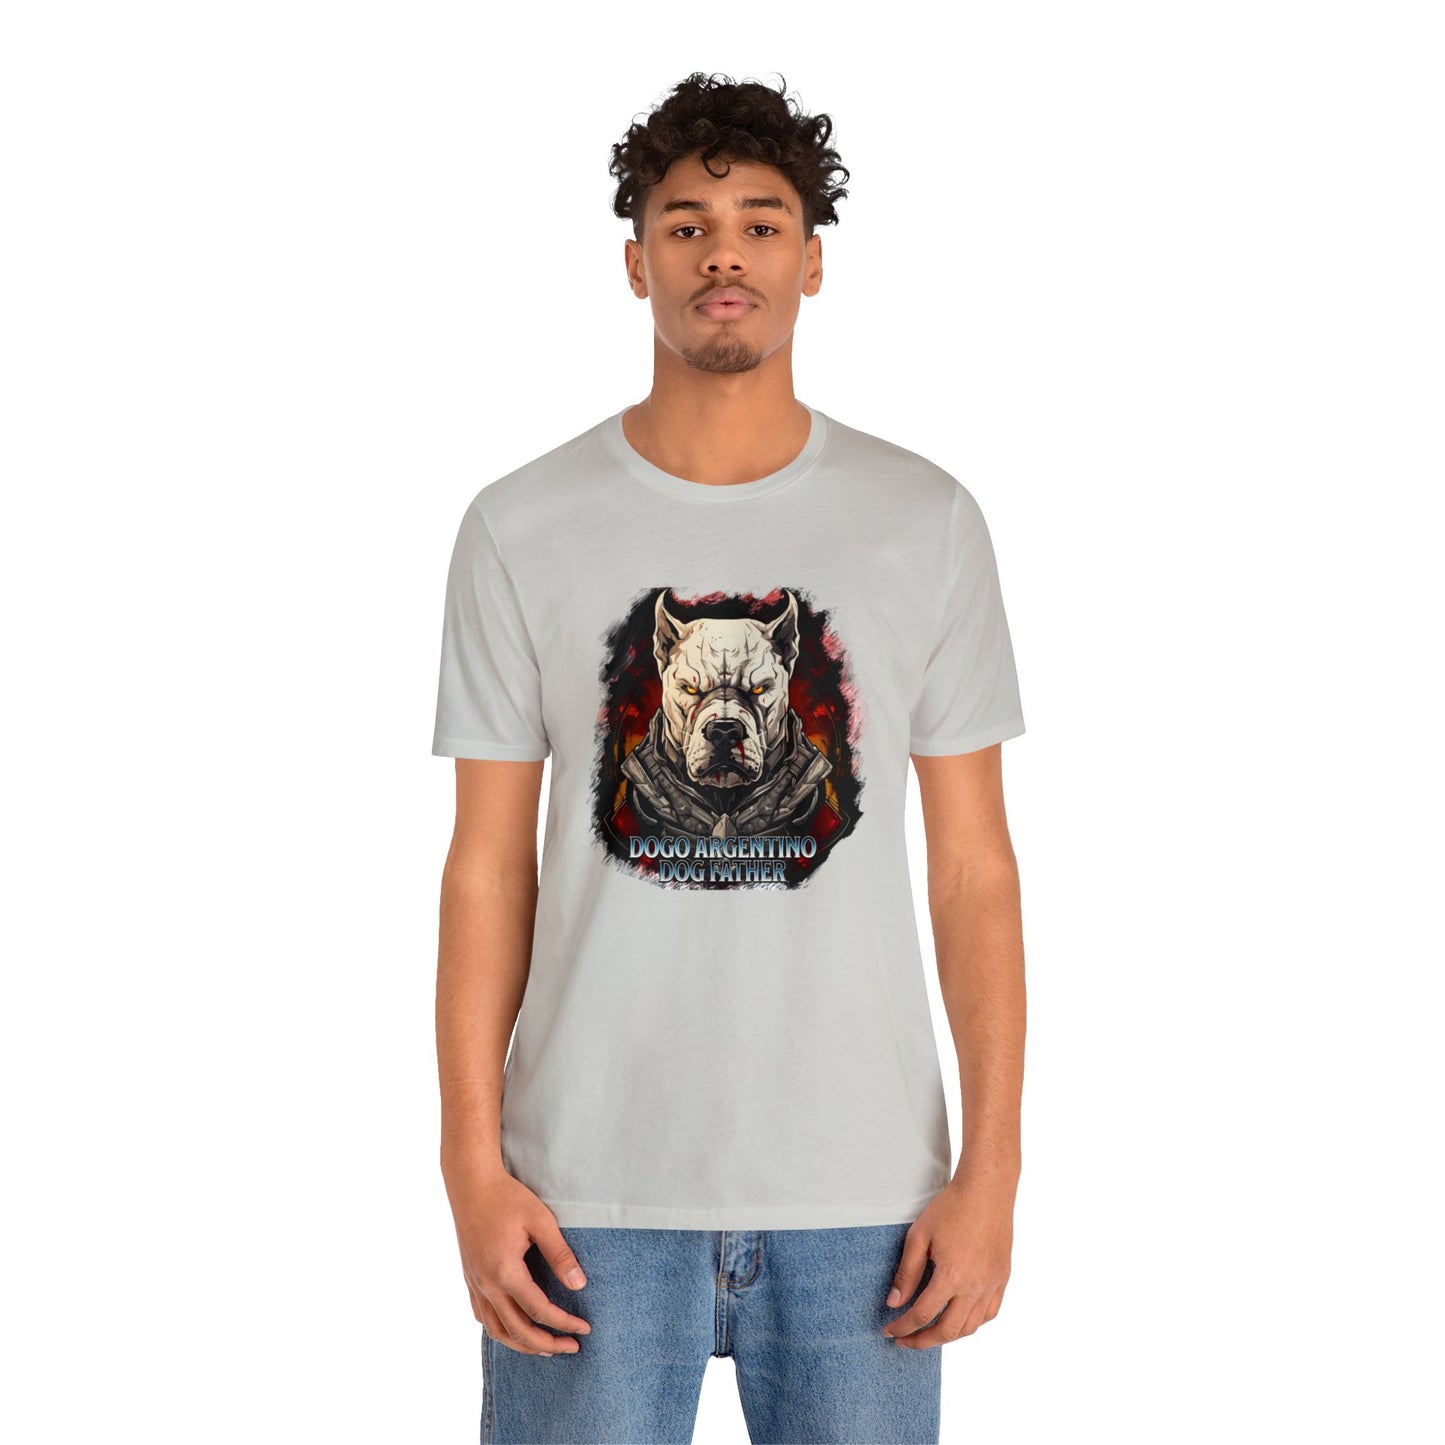 Dogo Argentino Dog Father T-shirt